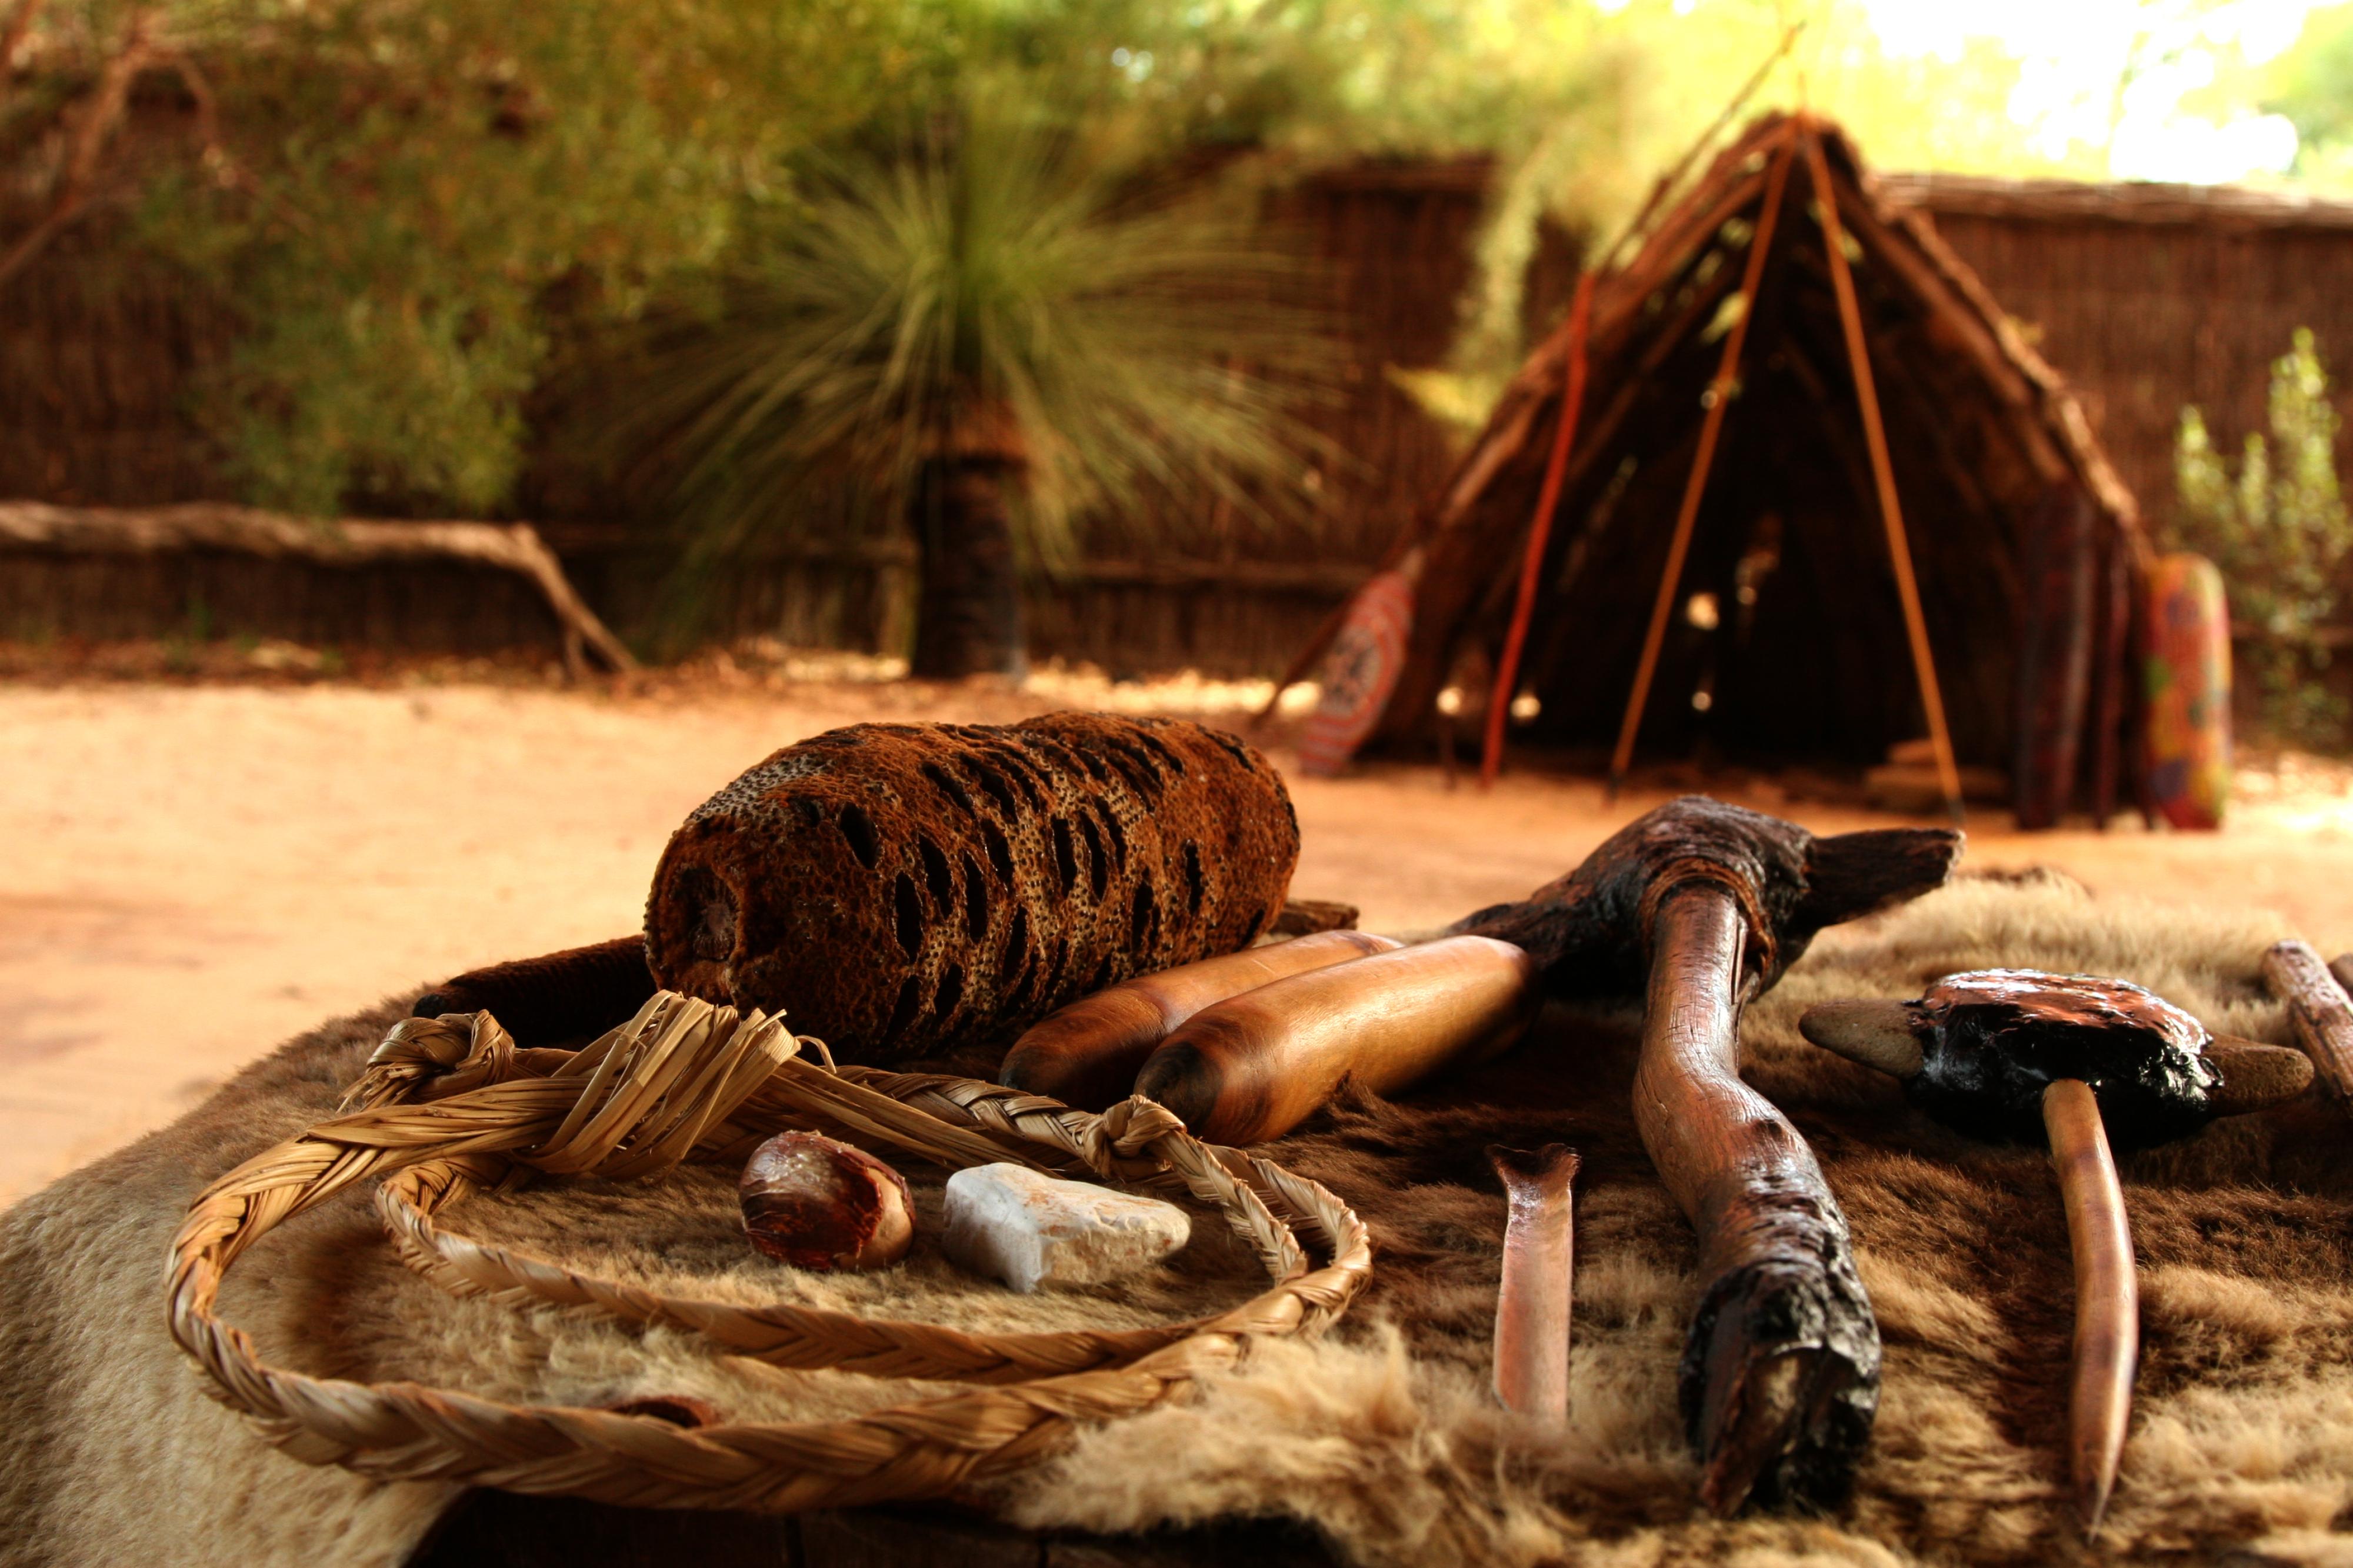 Aboriginal artefacts - cultural experience 